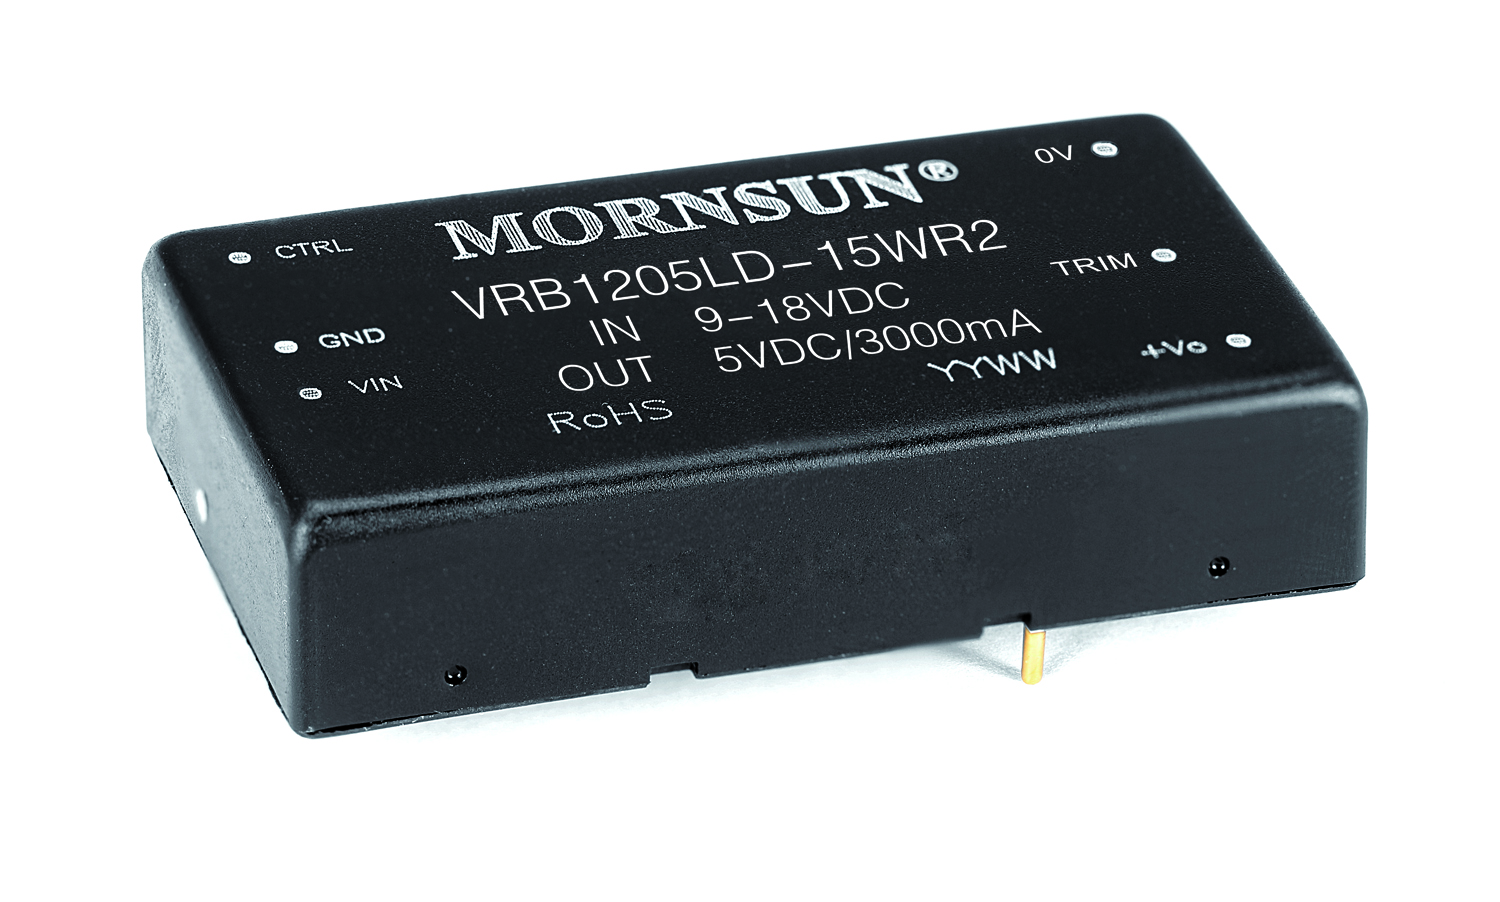 VRB1212LD-15WR2 | MORNSUN